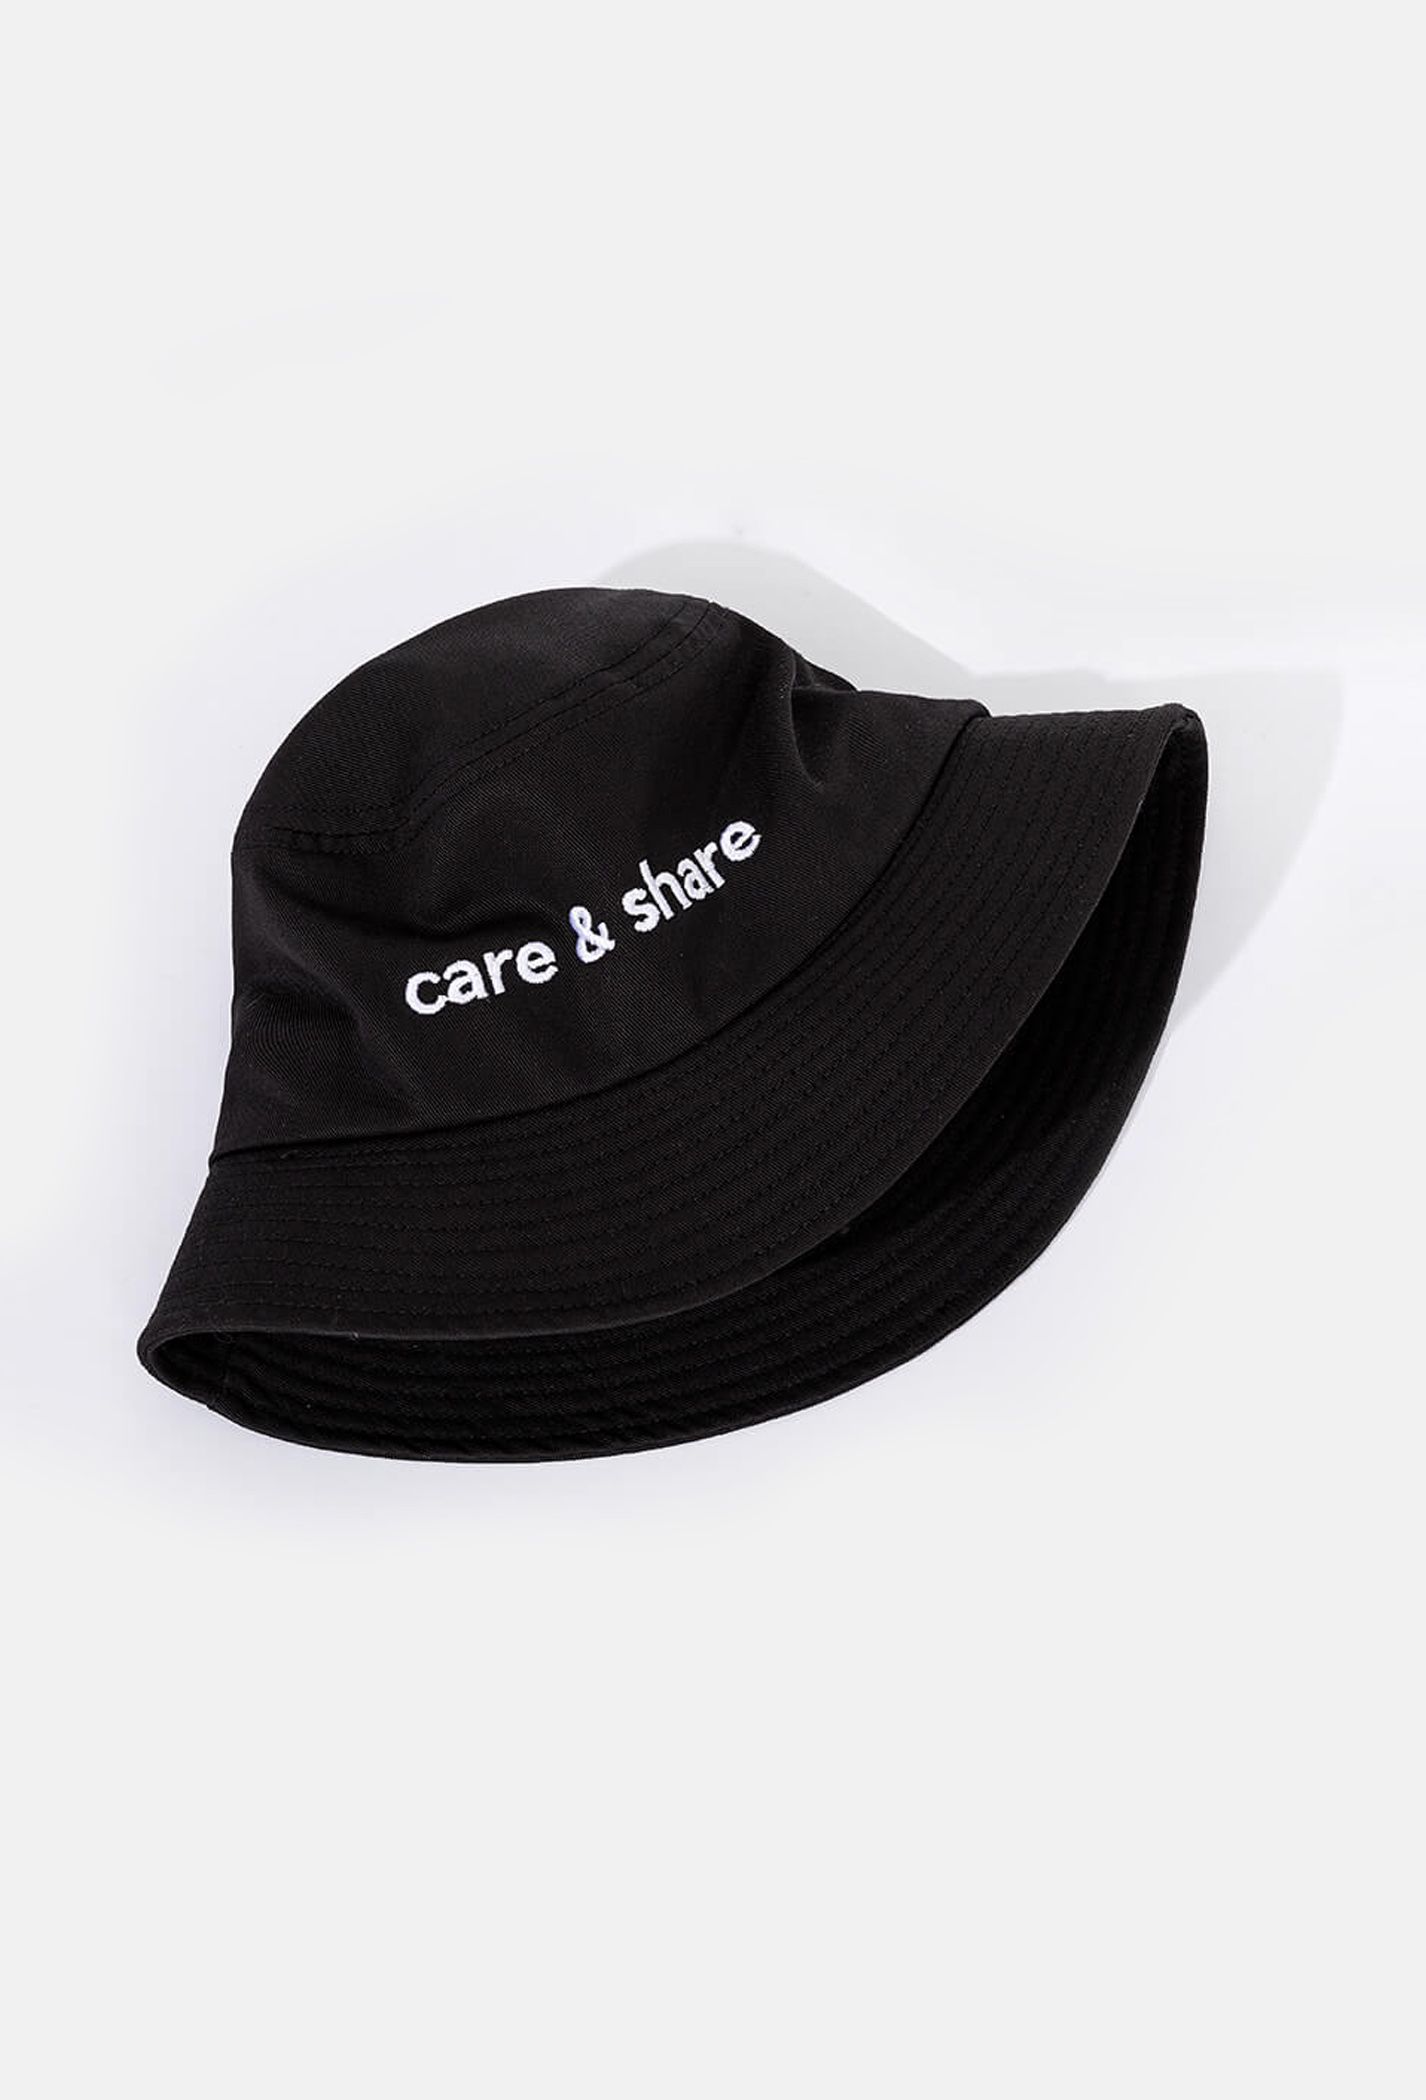 Bucket Hat Care & Share  1